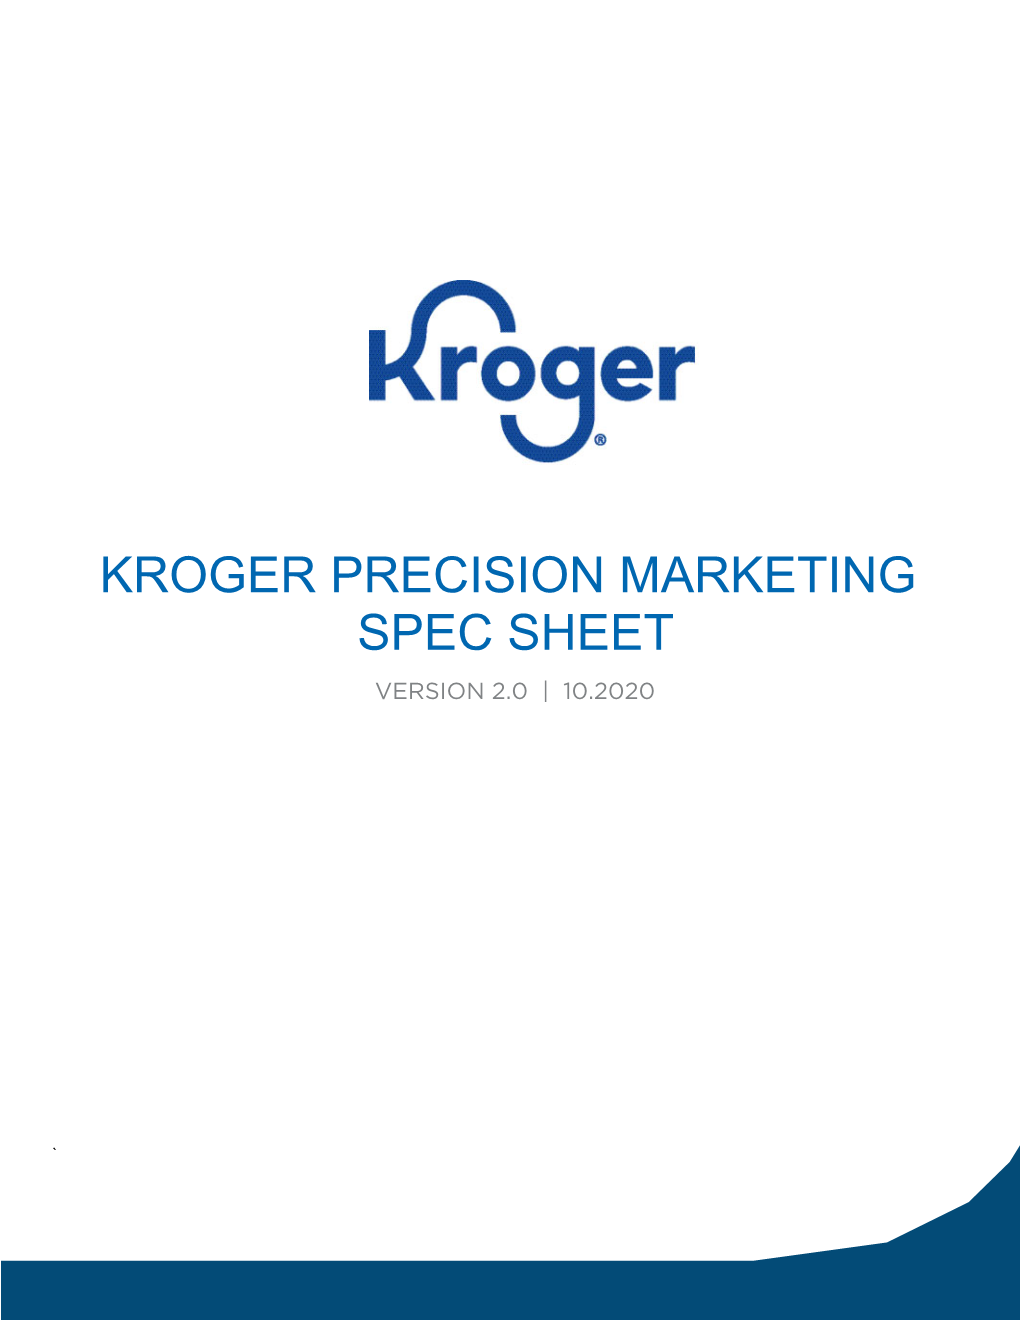 Kroger Precision Marketing Spec Sheet Version 2.0 | 10.2020